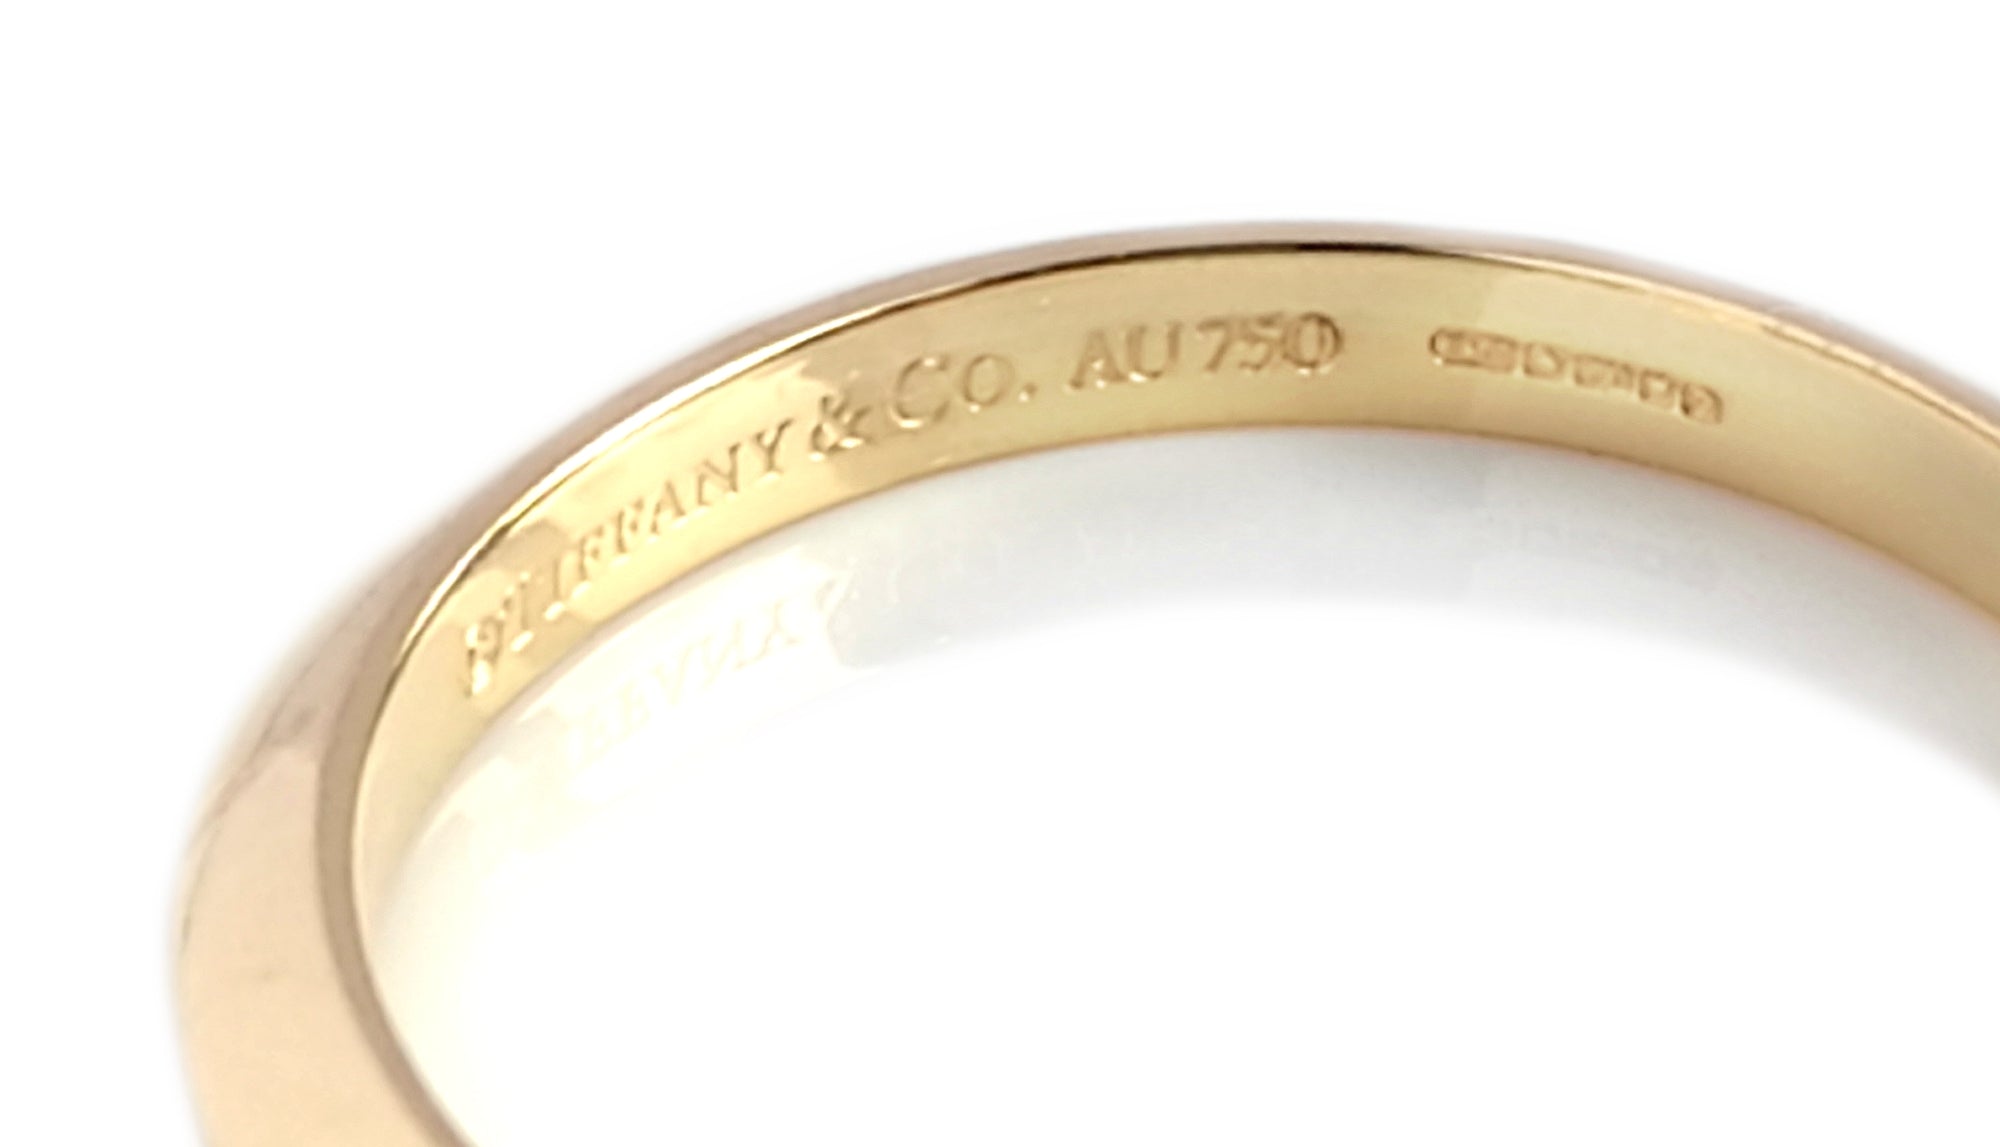 Tiffany & Co. Knife Edge Wedding Ring in 18k Yellow Gold